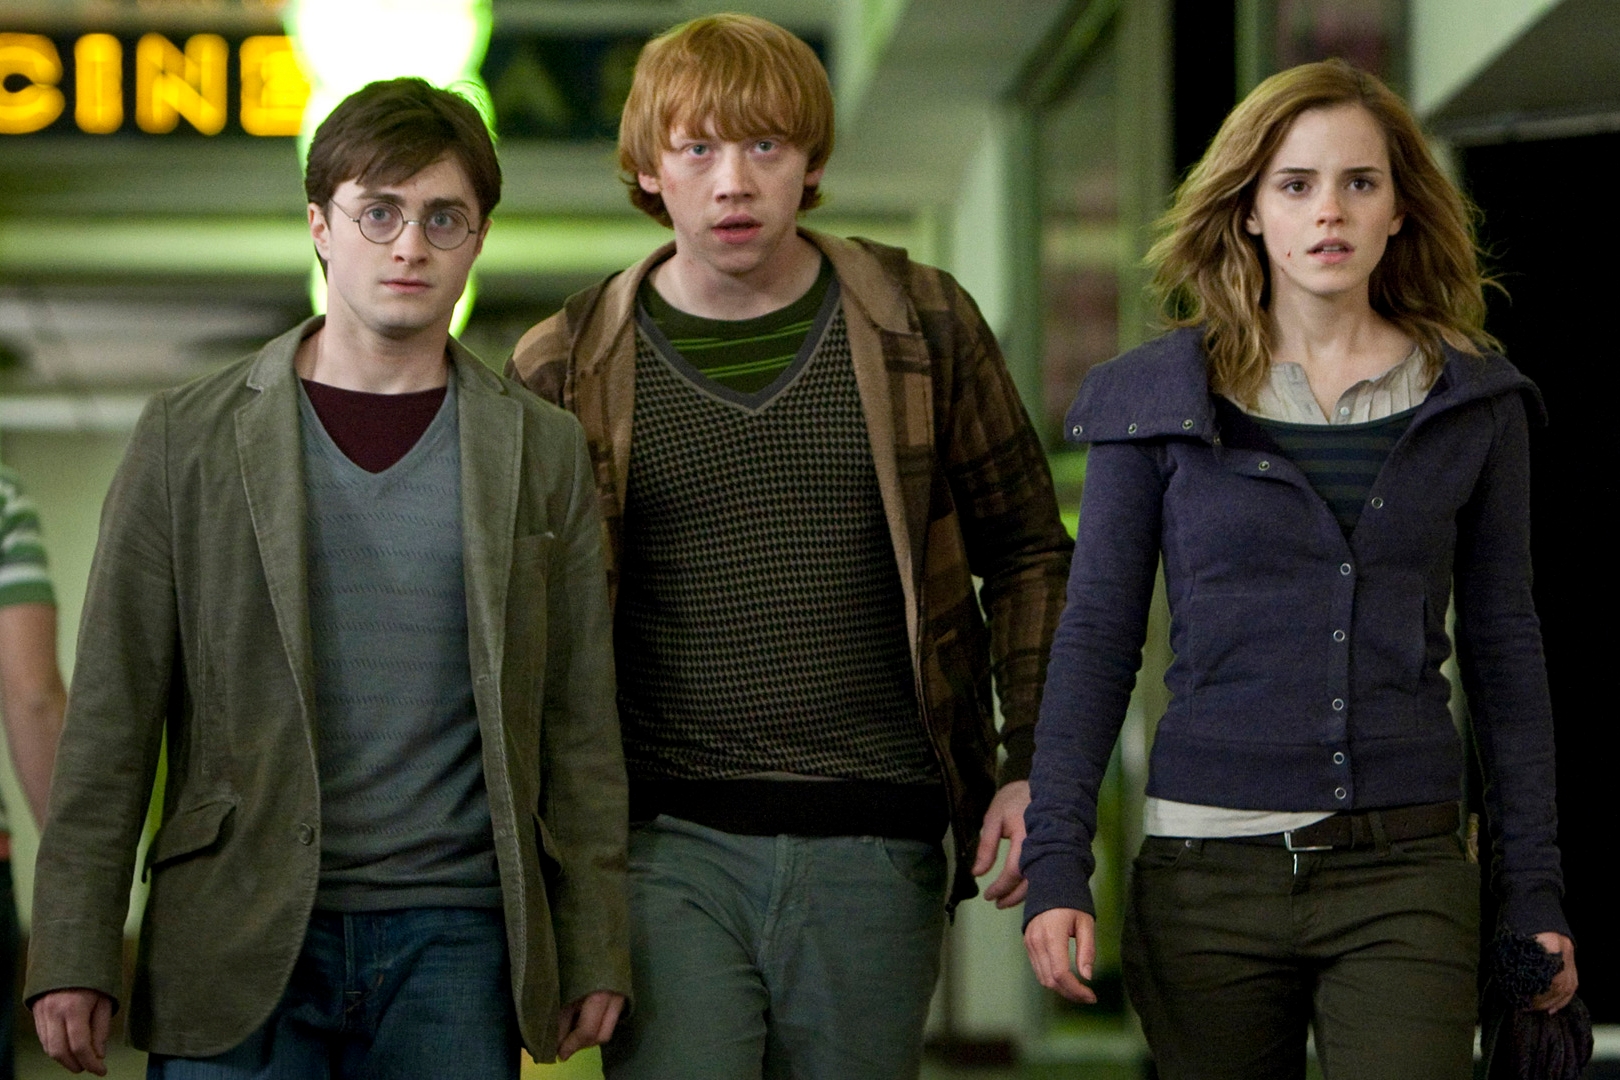 Harry Potter - Hermione, Rony e Harry no jogo de xadrez